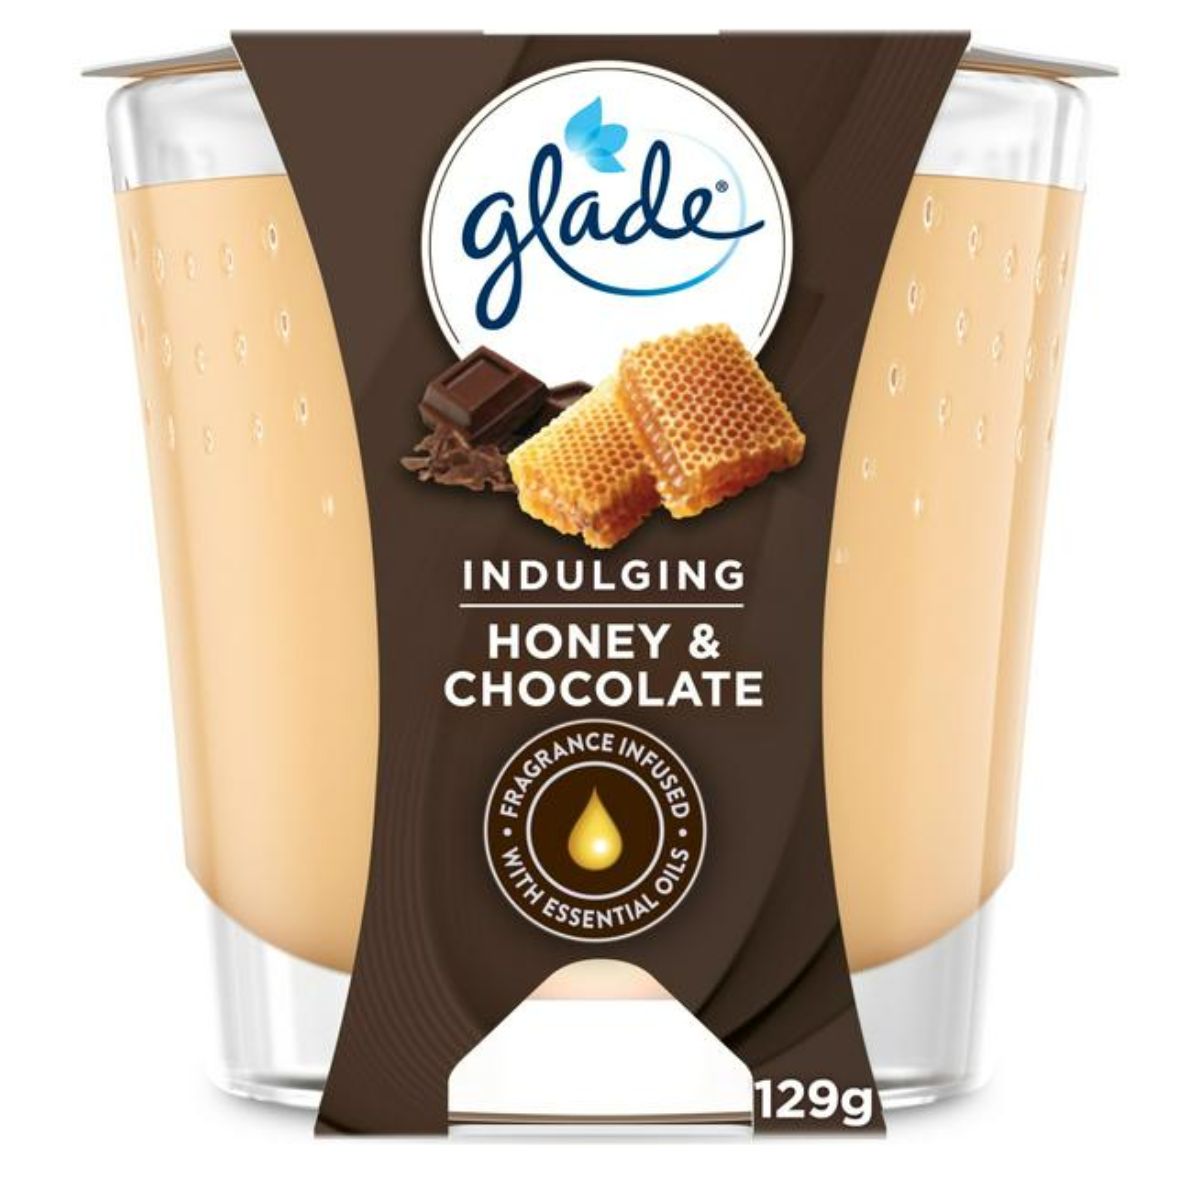 Glade - Candle Honey & Chocolate - 129g indulging honey & chocolate.